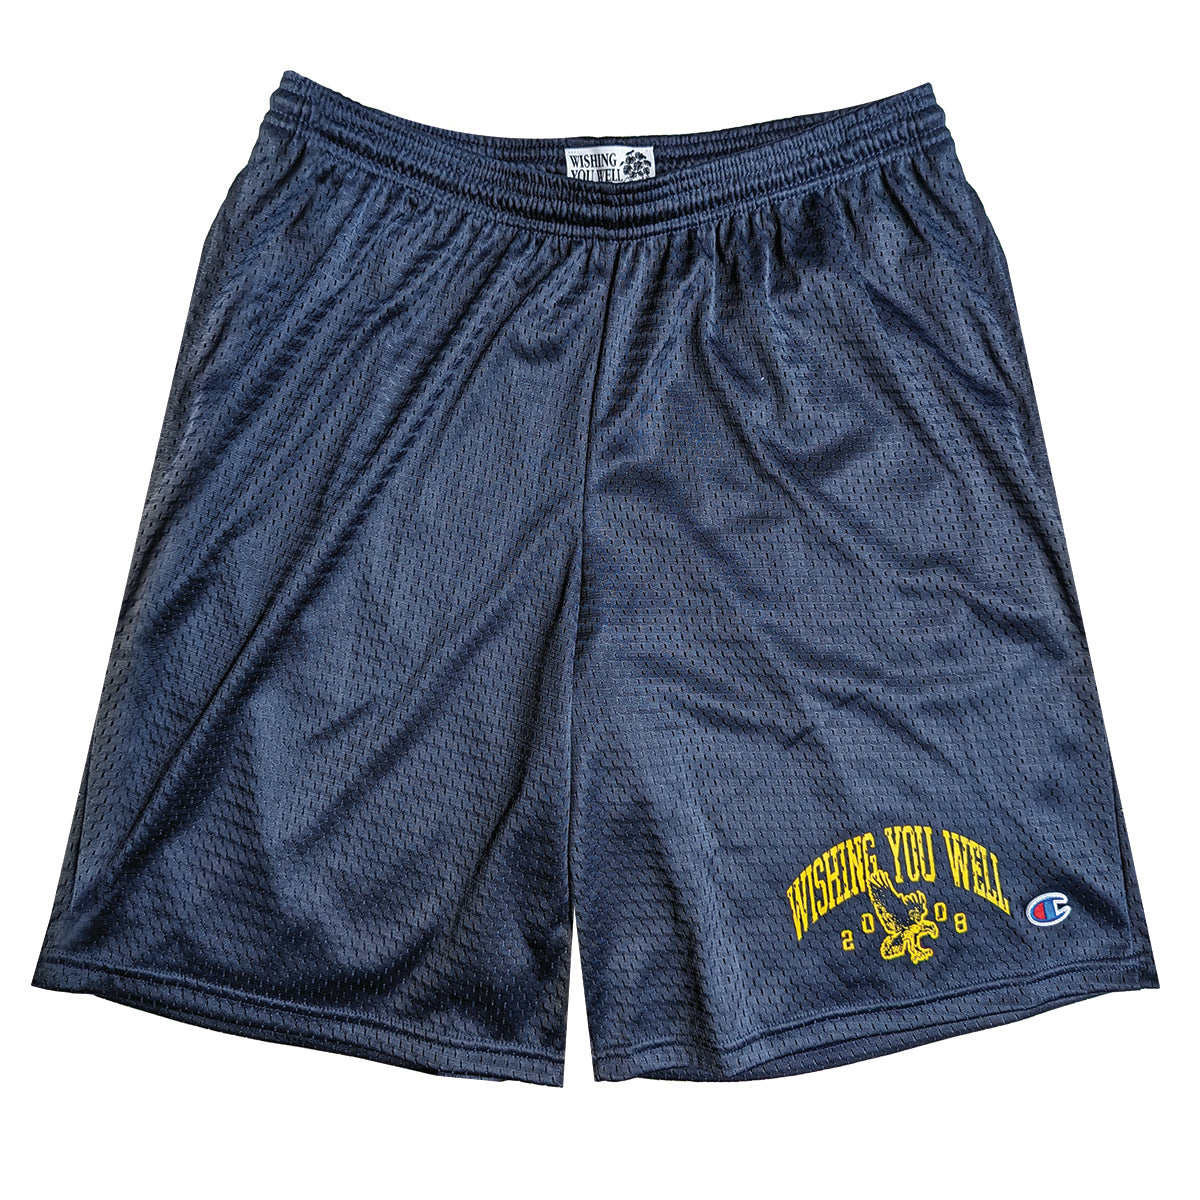 Collegiate Mesh Gym Shorts (Navy Blue)